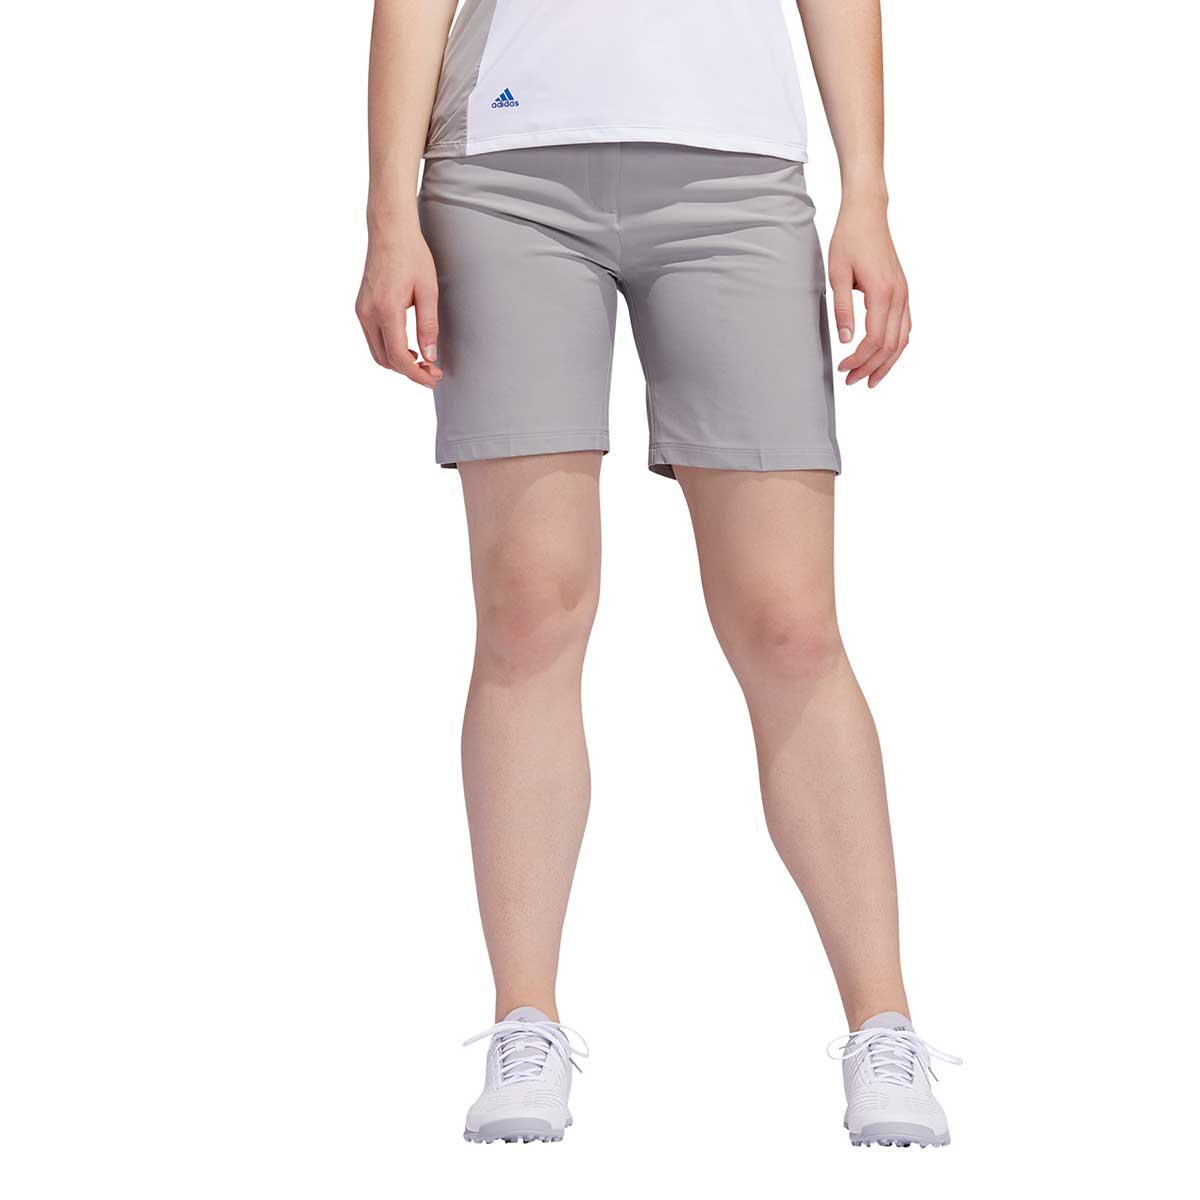 adidas women's golf shorts